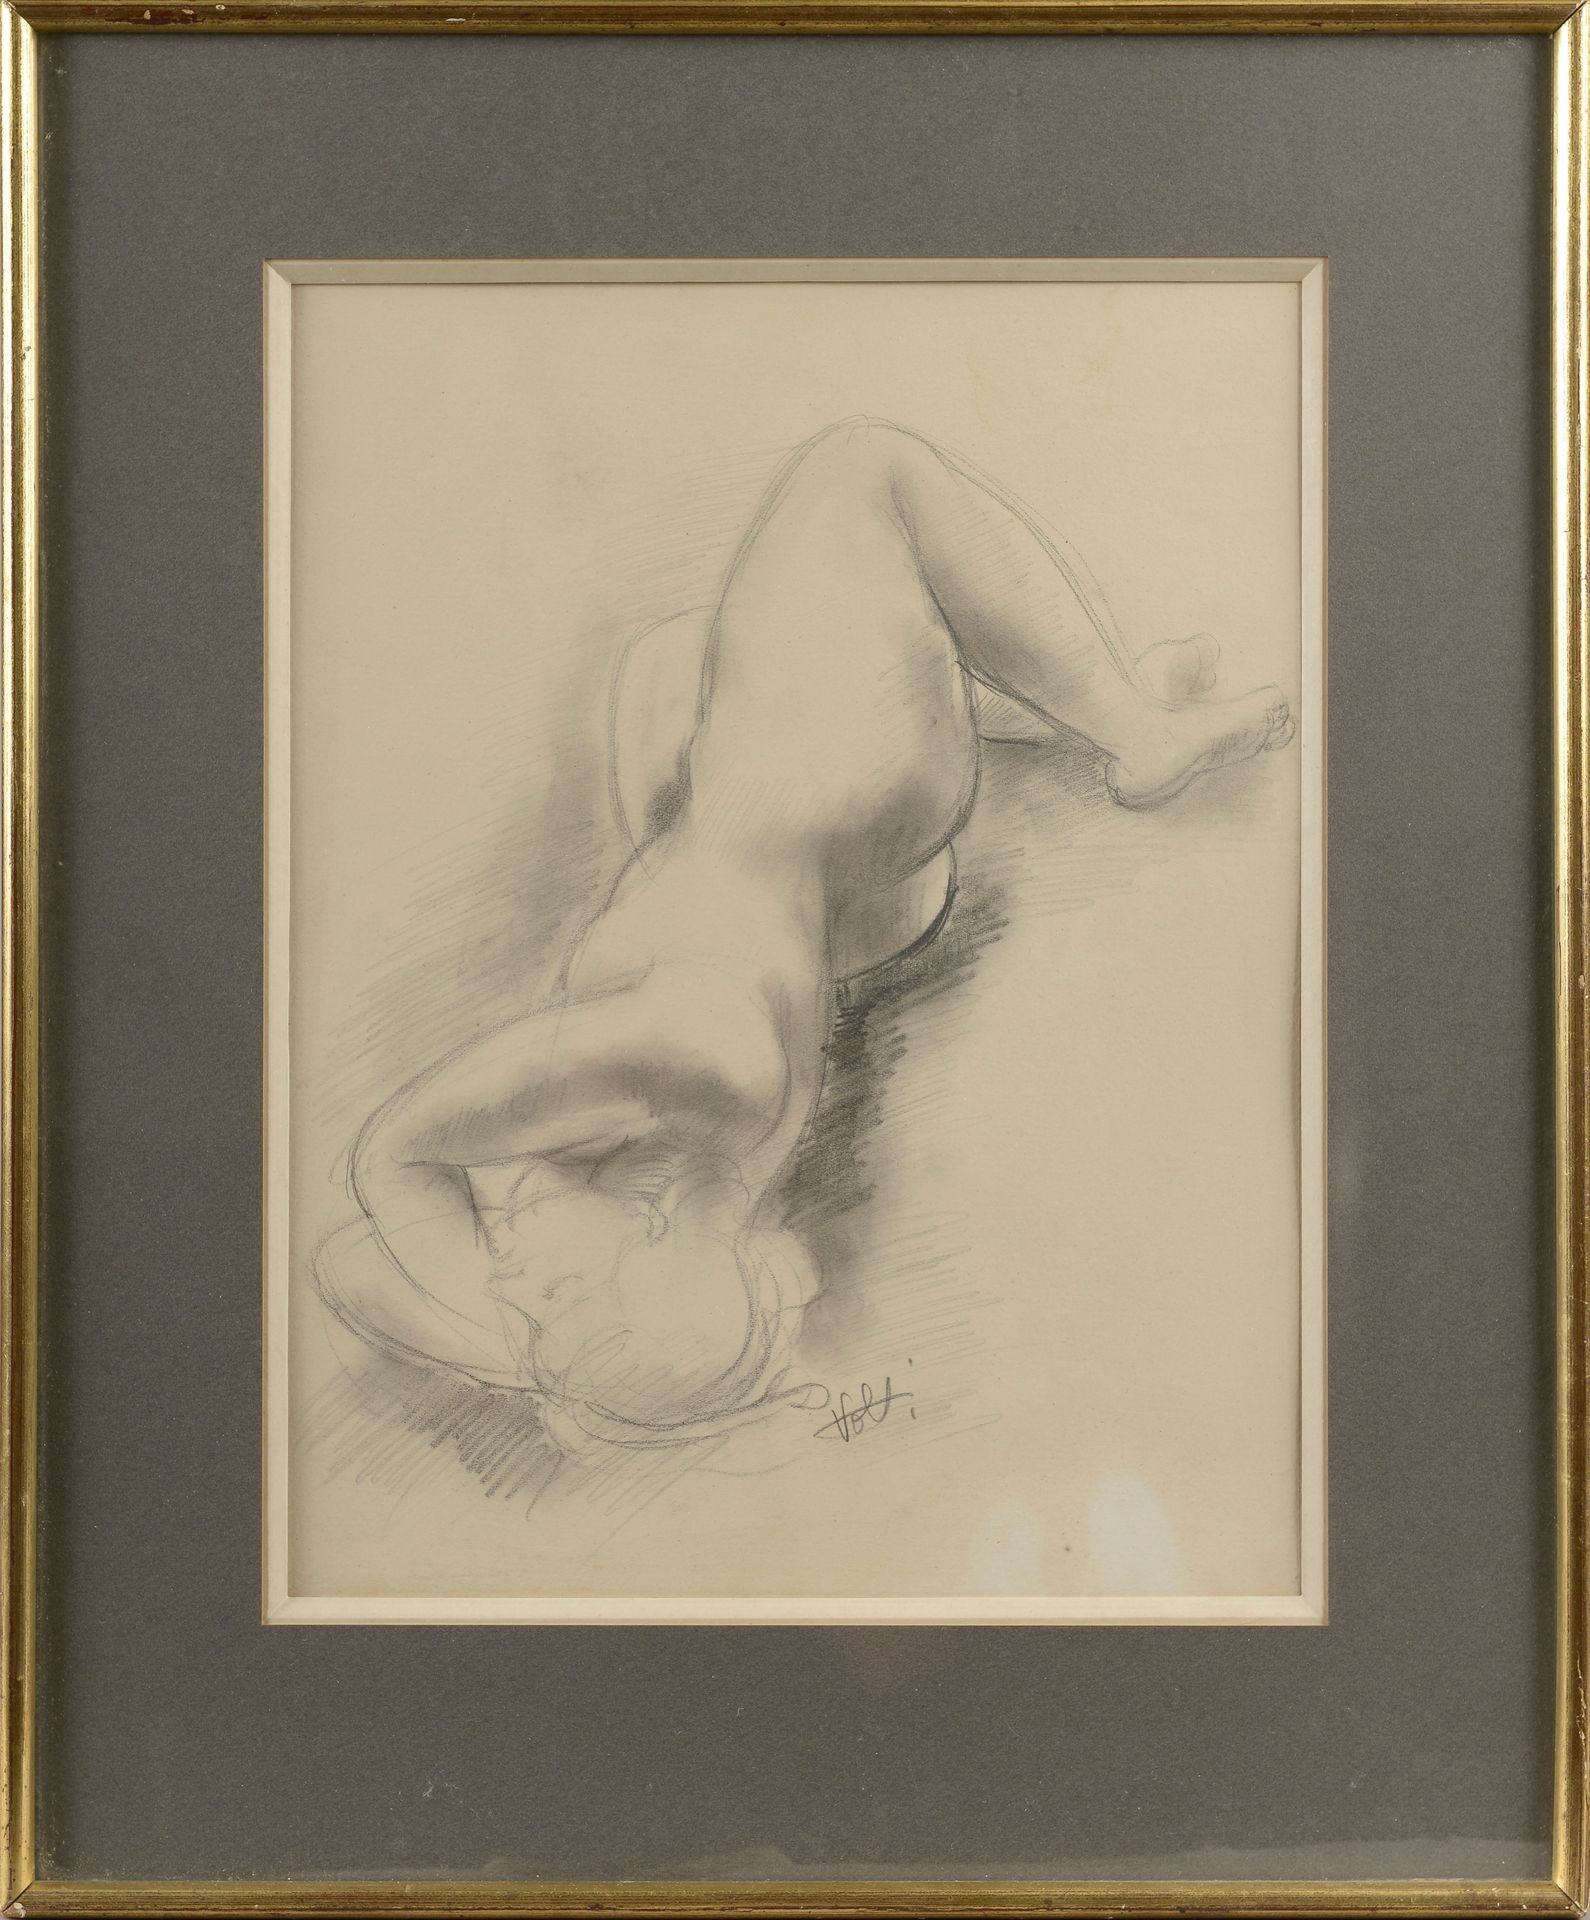 Null 安东尼奥奇-沃尔蒂（1915-1989）。

睡觉的女性裸体。

黑色铅笔画，右下方有签名。

高度：35厘米35 cm - 宽度： 27 cm